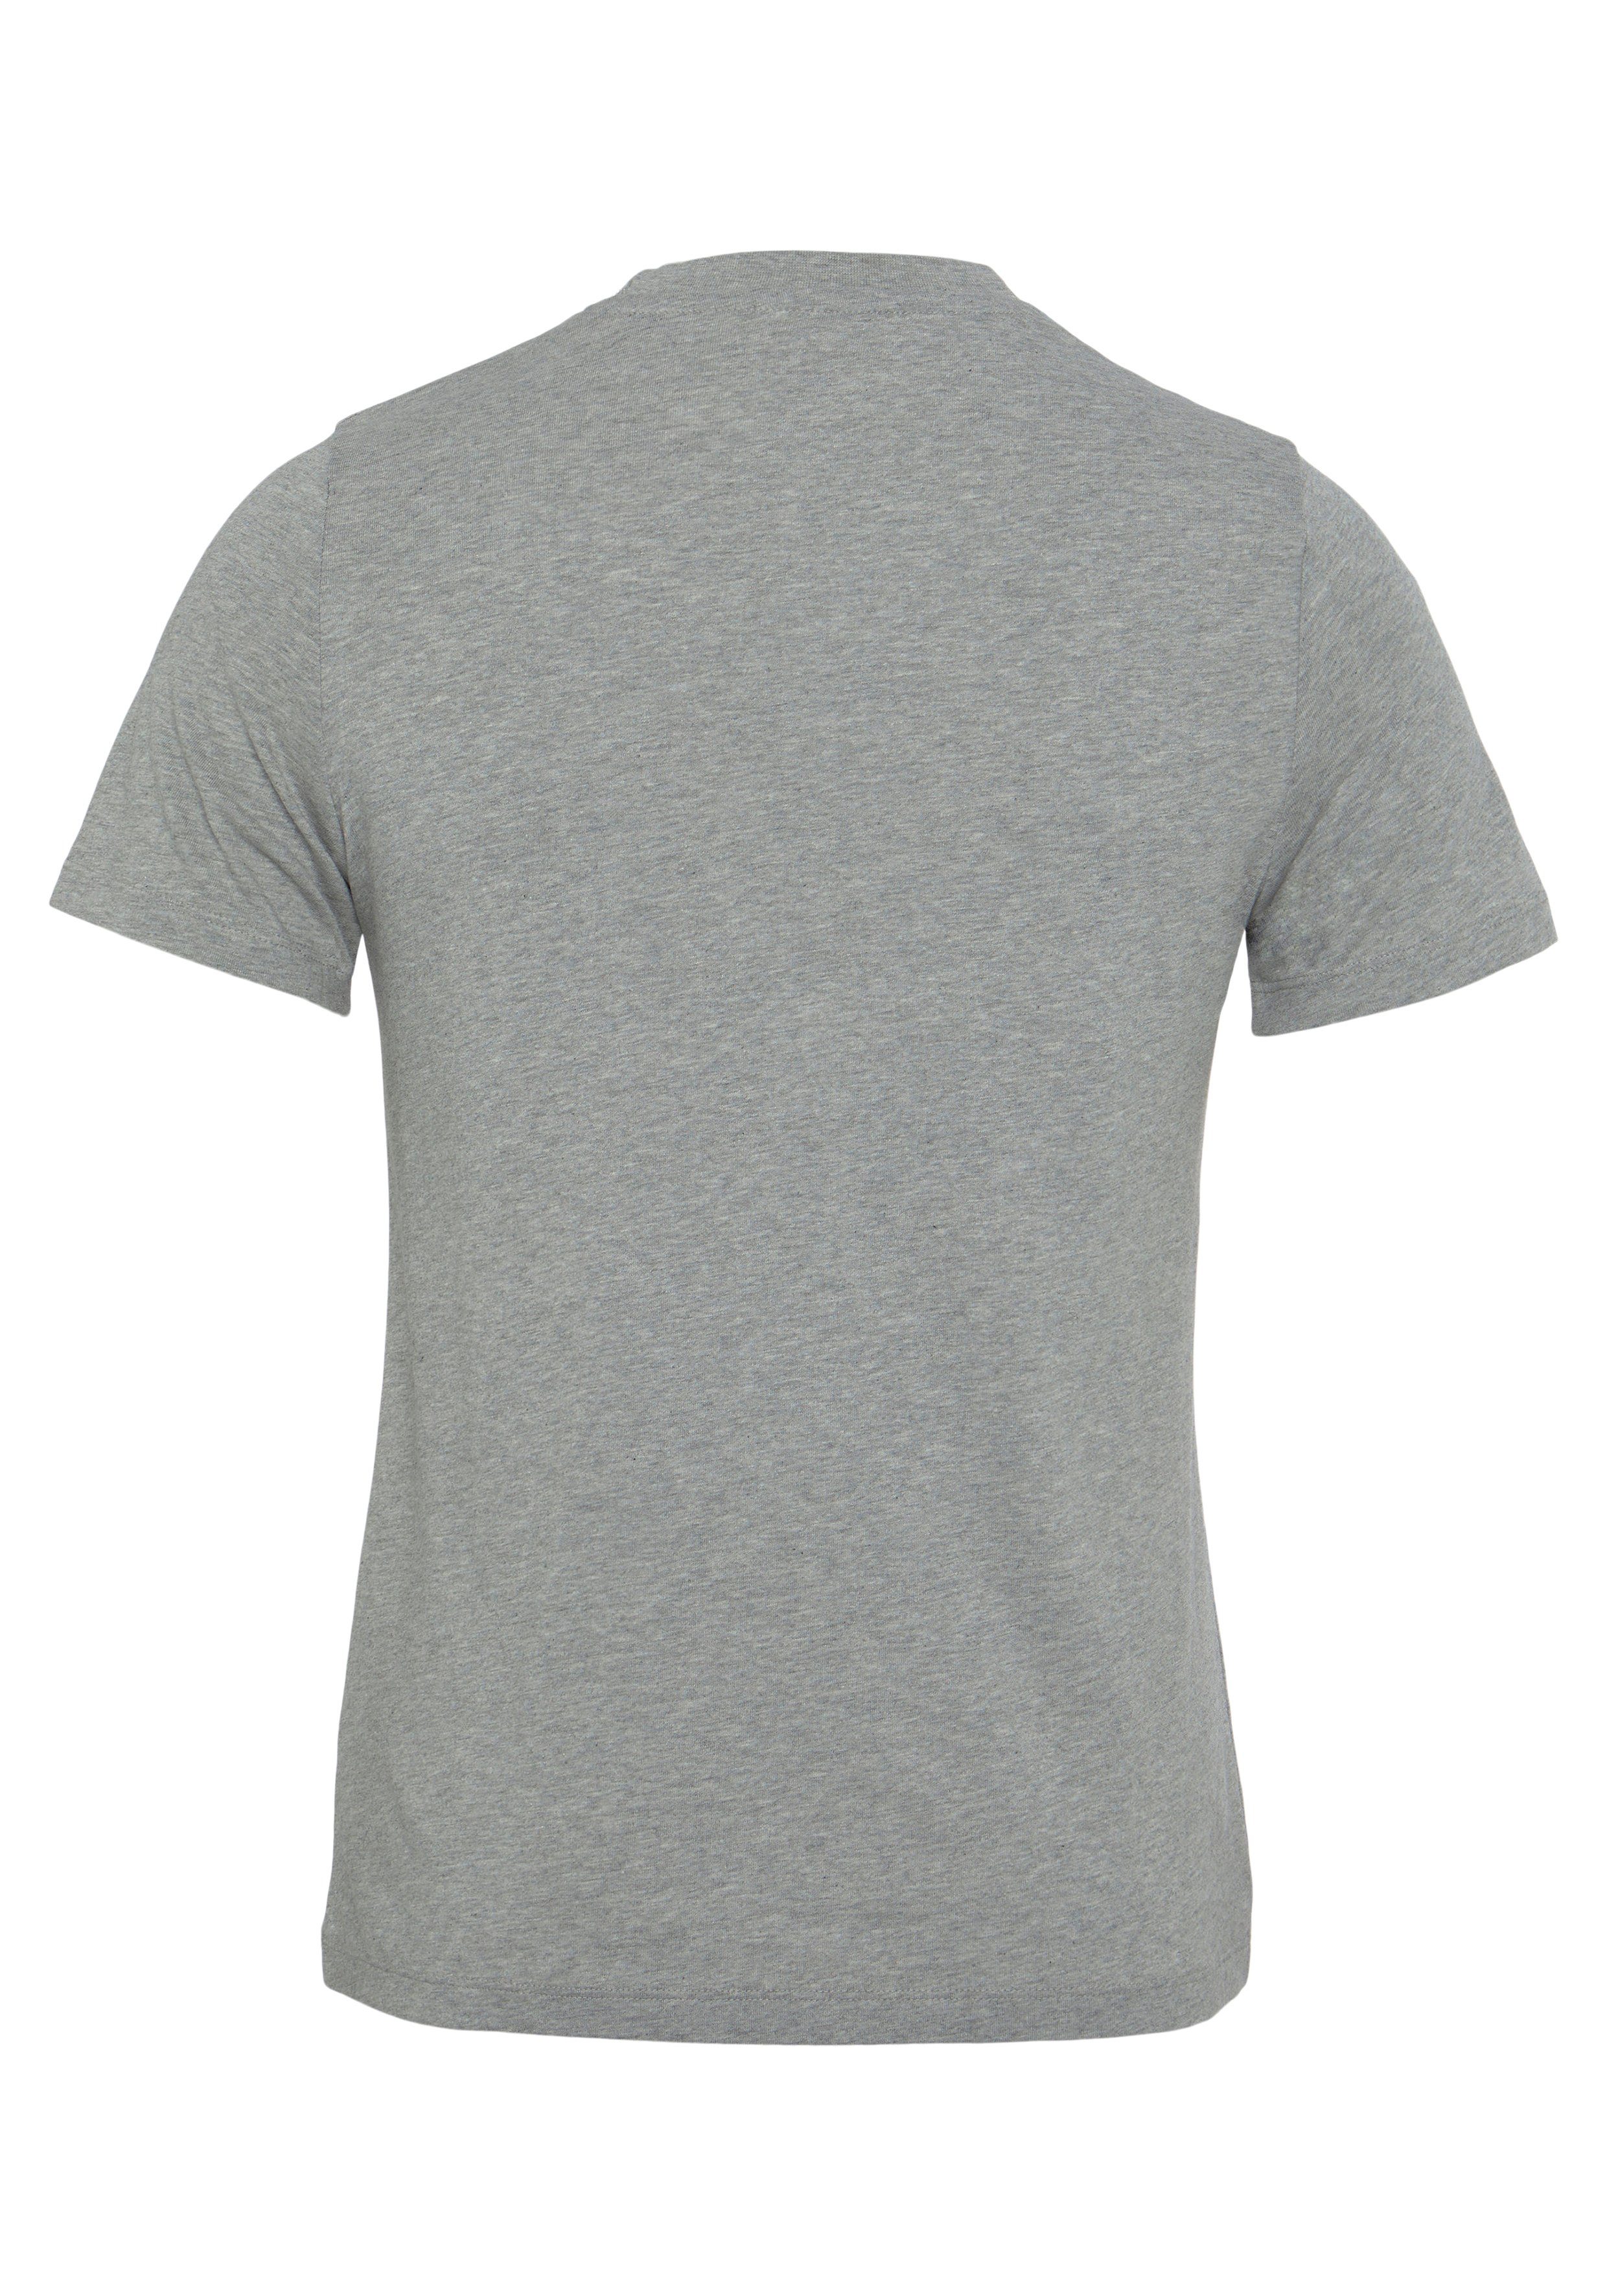 Reebok T-Shirt Reebok heather medium Read Graphic grey Tee